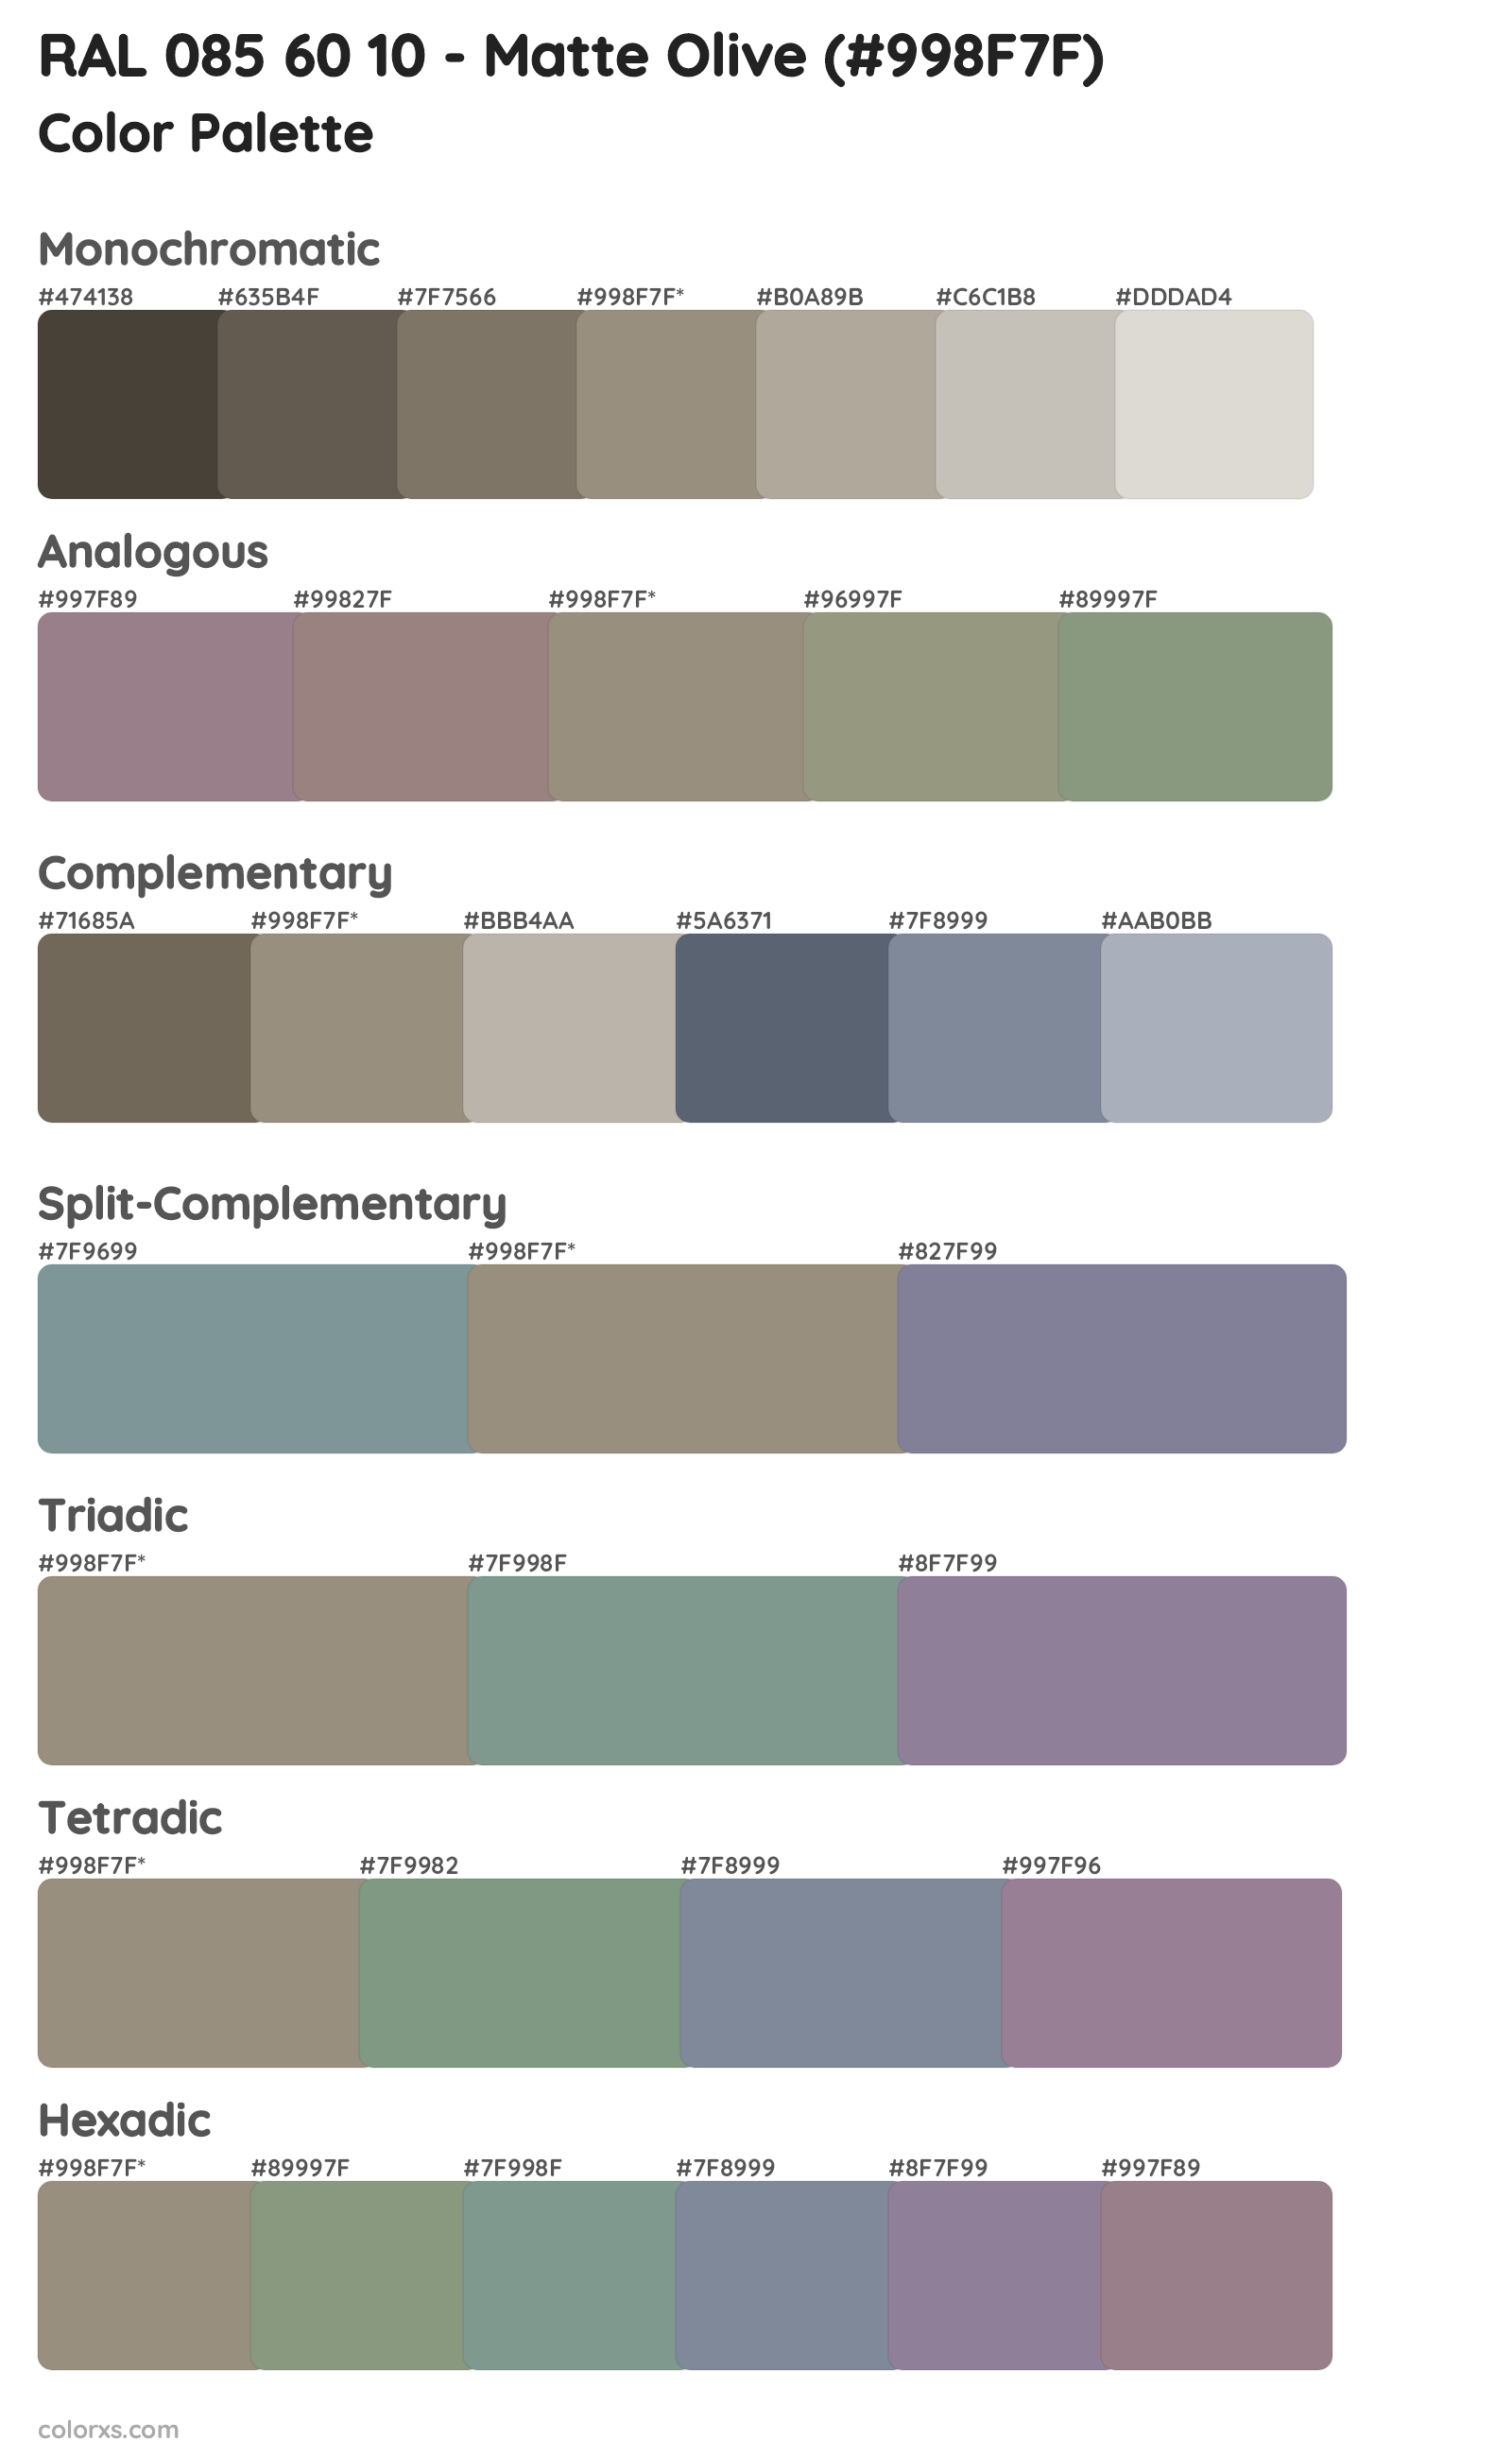 RAL 085 60 10 - Matte Olive Color Scheme Palettes